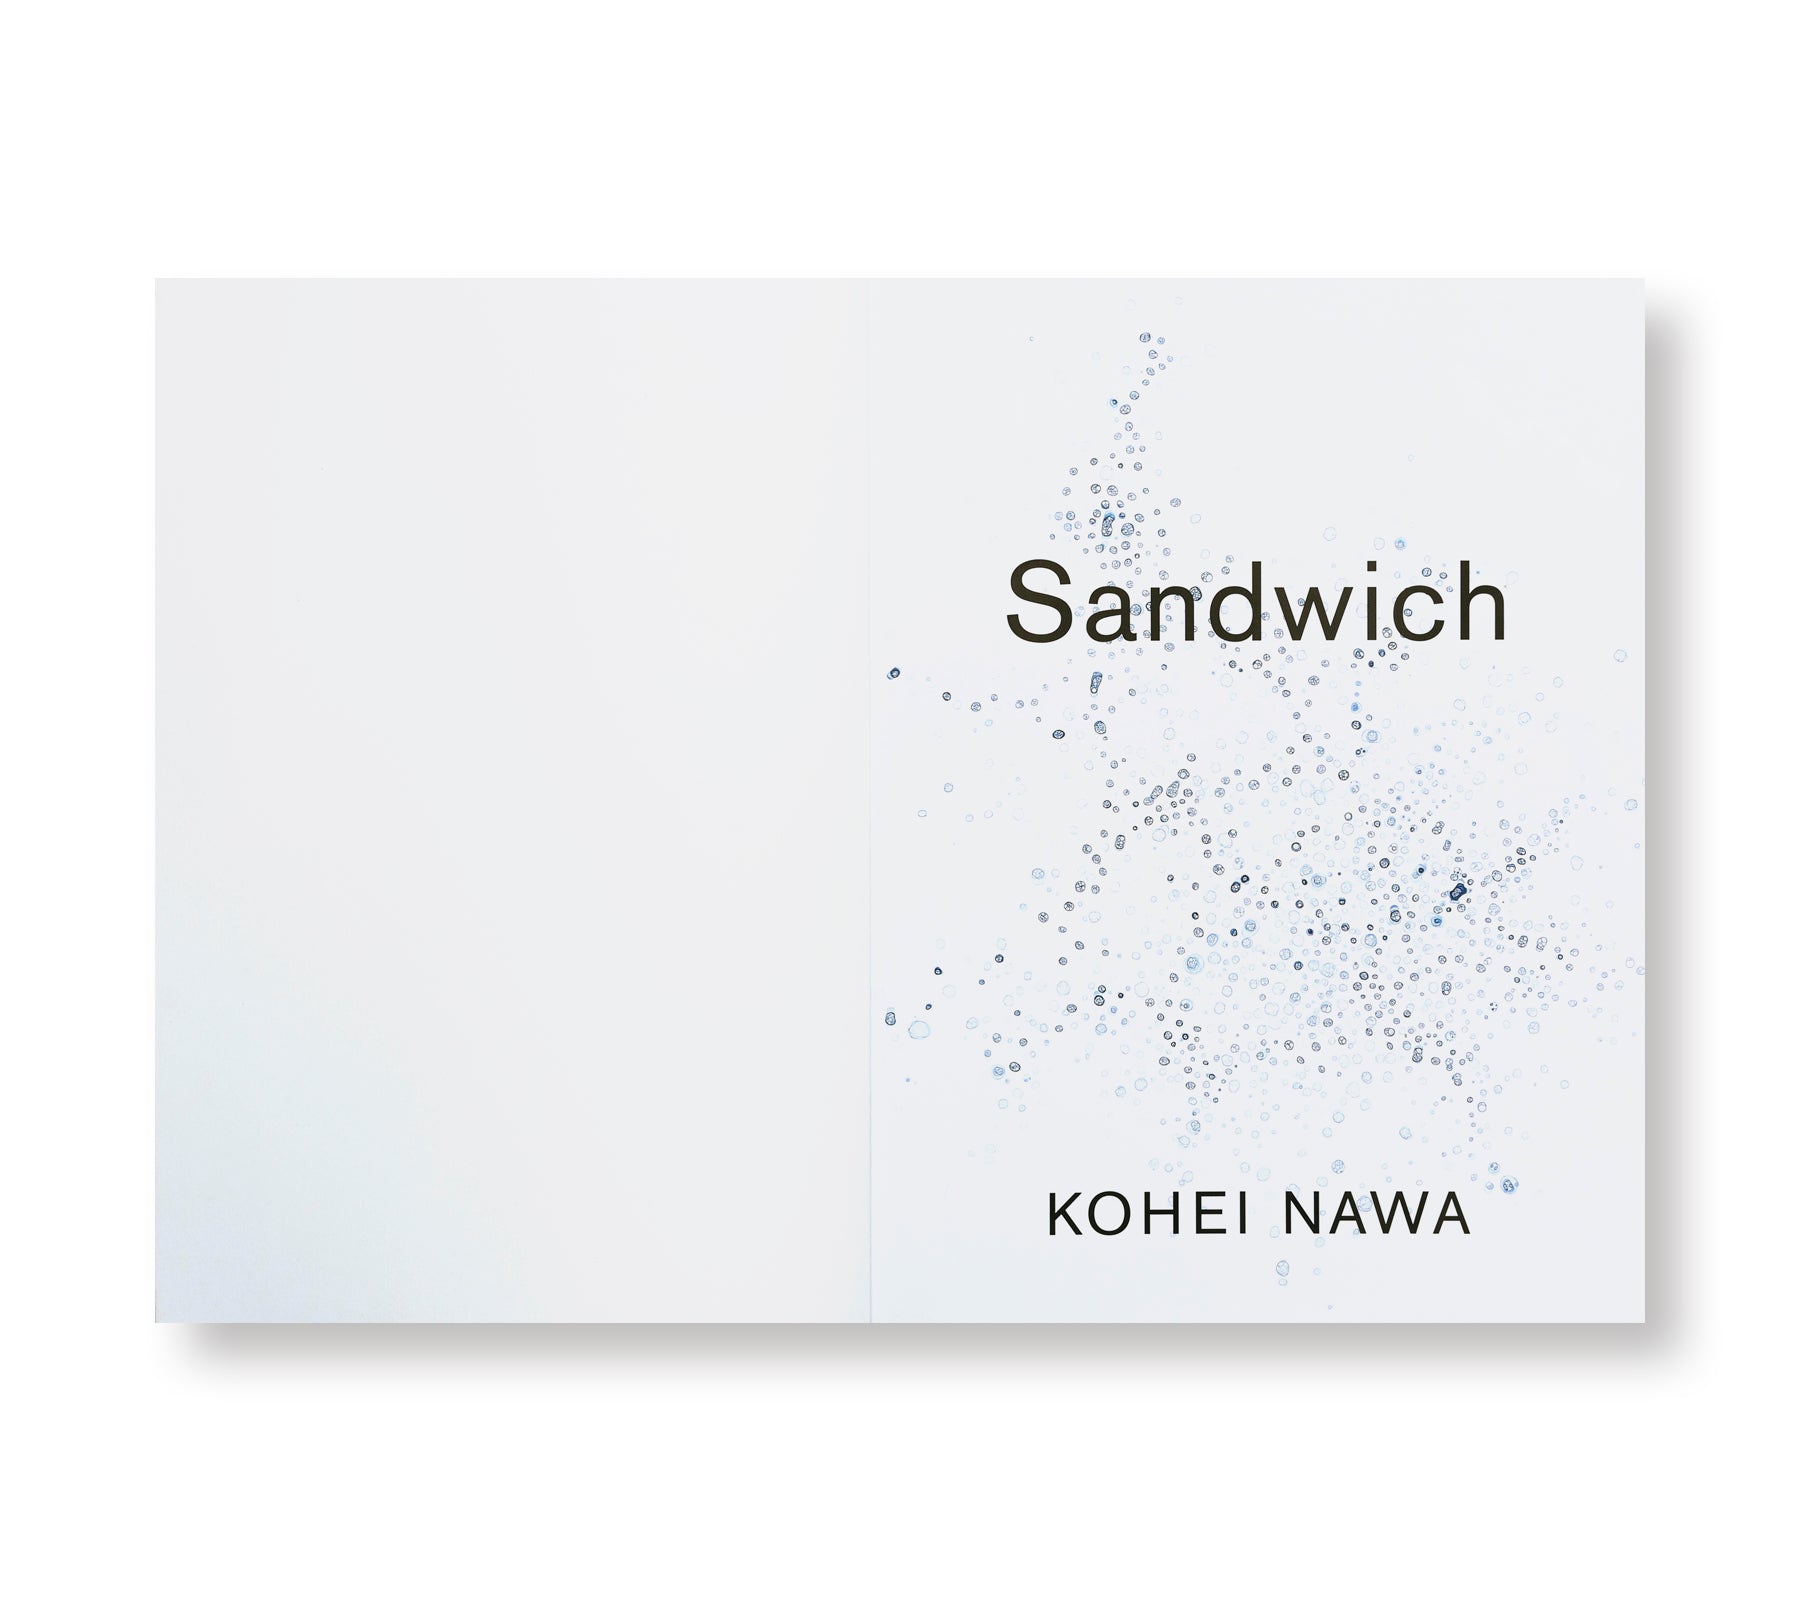 SANDWICH by Kohei Nawa